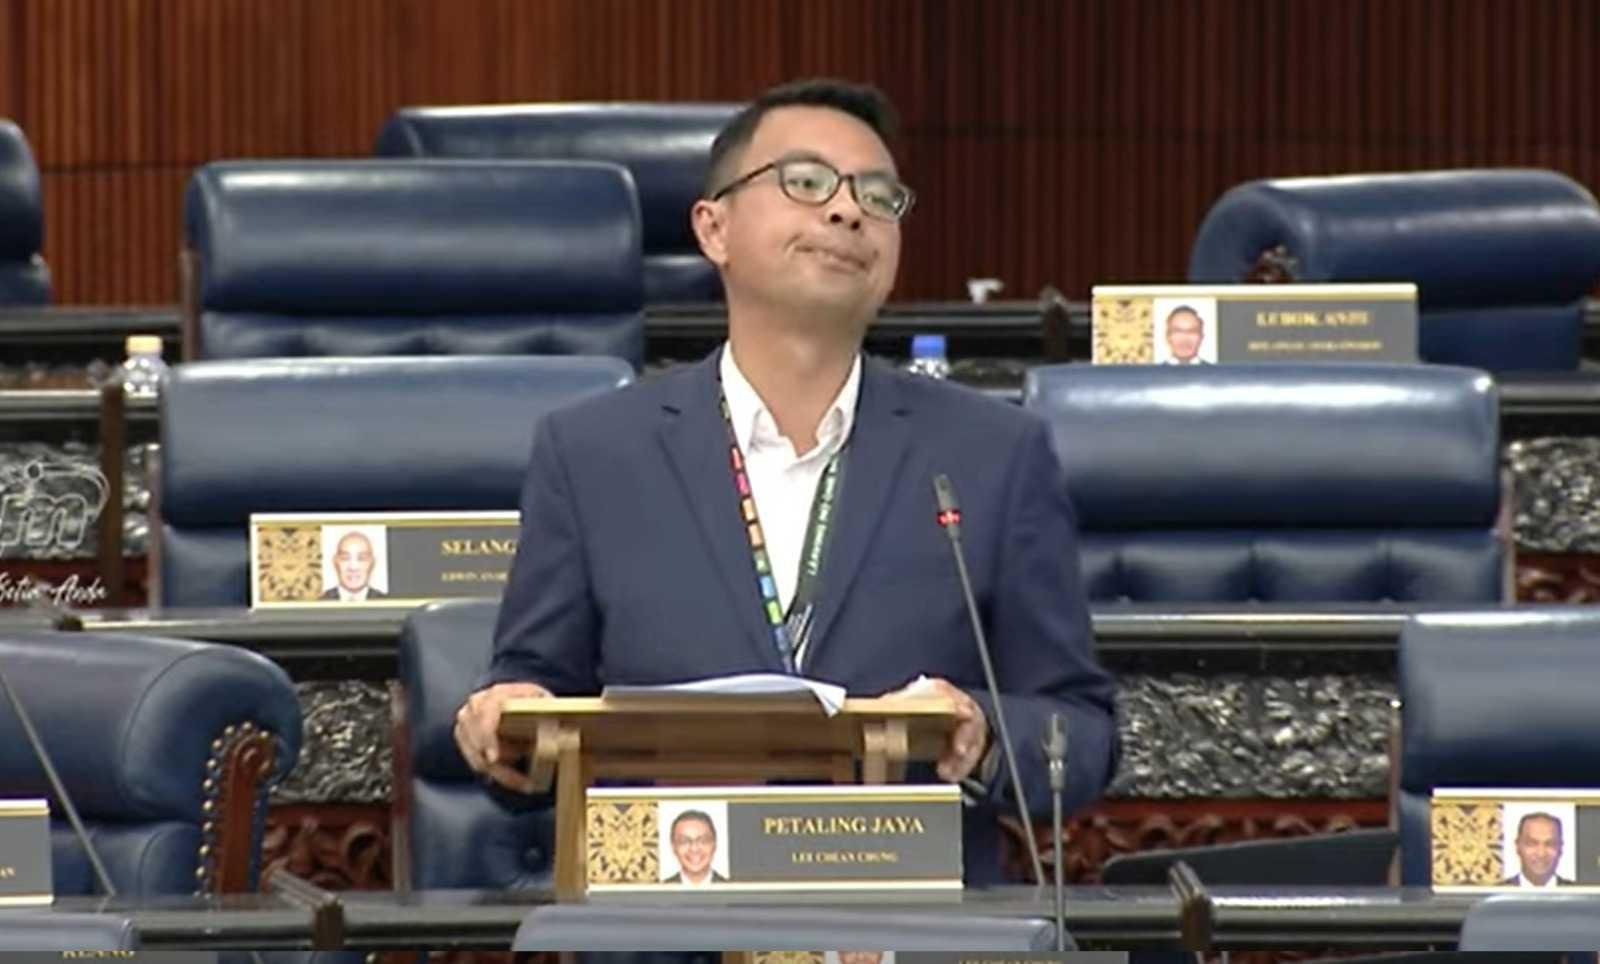 Petaling Jaya MP Lee Chean Chung.